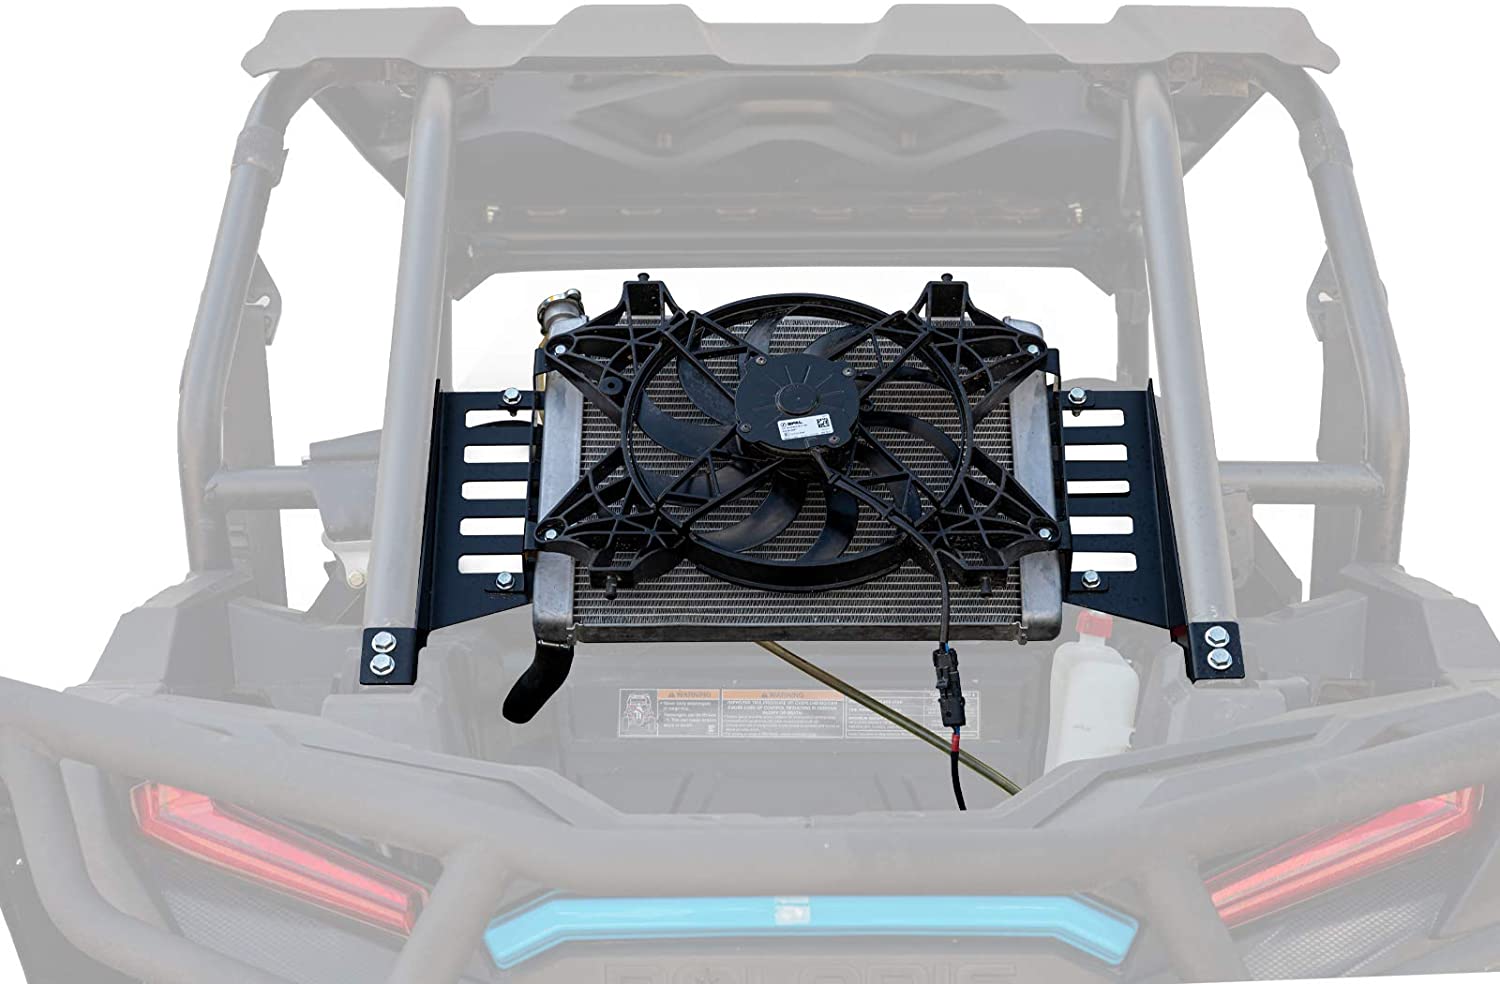 SuperATV Radiator Relocation Kit for Polaris RZR XP 1000 / XP 4 1000 (2014+) - Relocates Radiator Behind the Cab